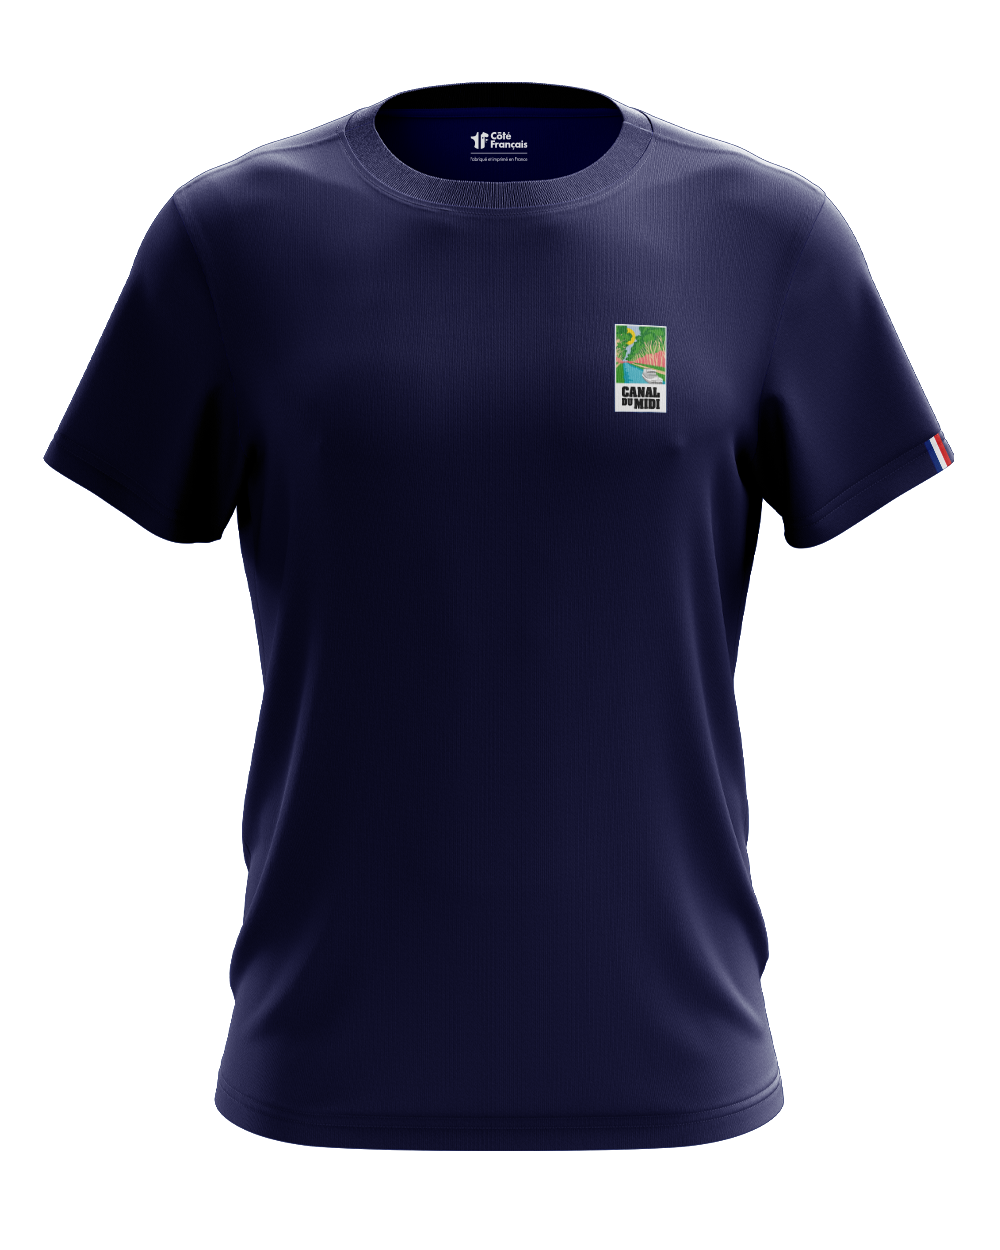 T-Shirt "Canal du midi" - bleu